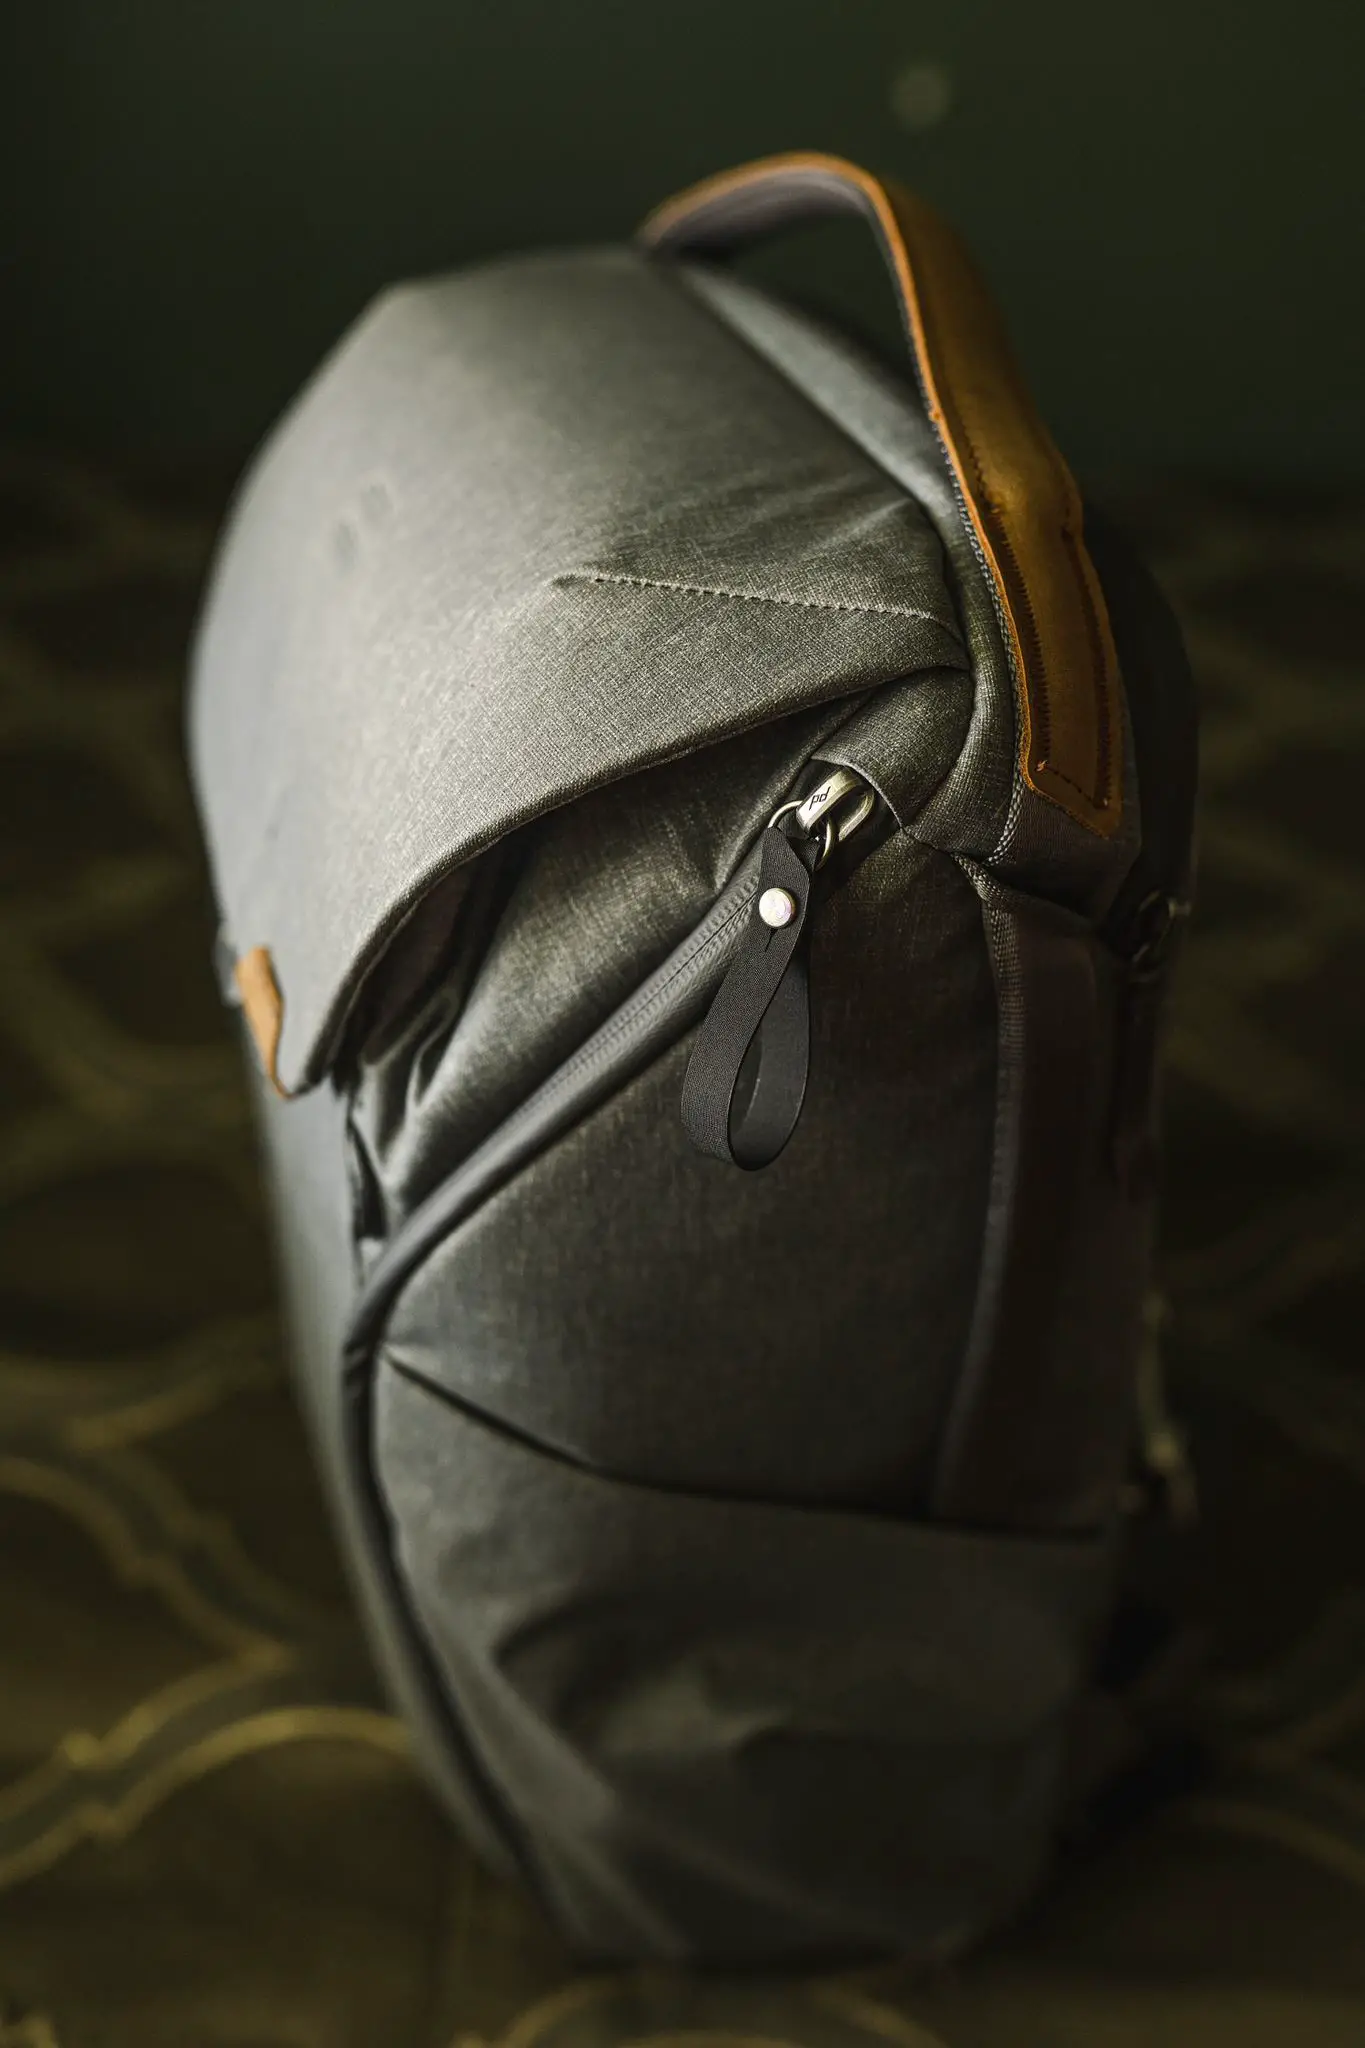 peak design backpack from above